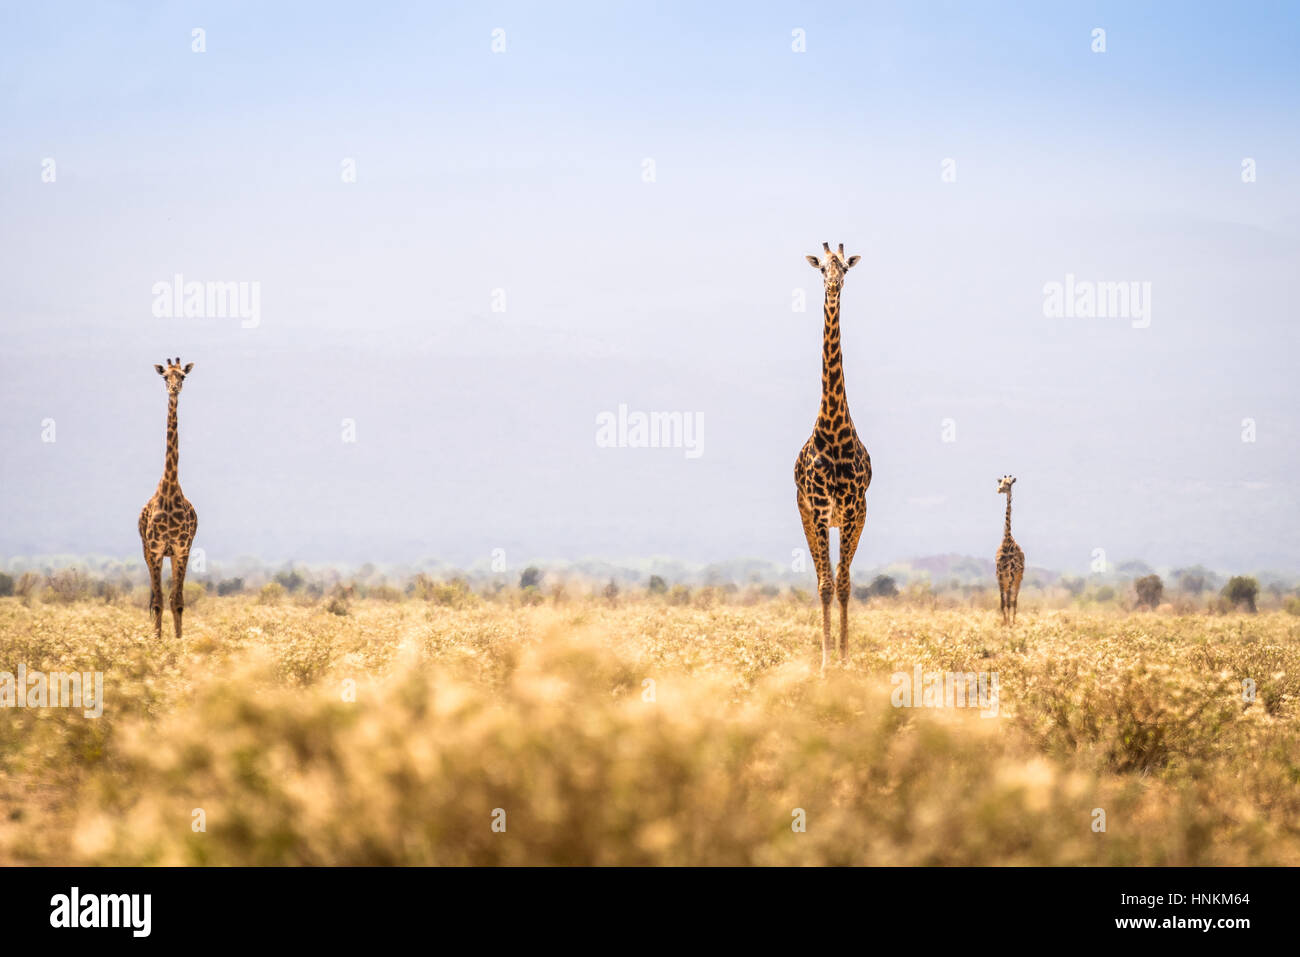 Three giraffes walking through the savanna, Kenya Stock Photo